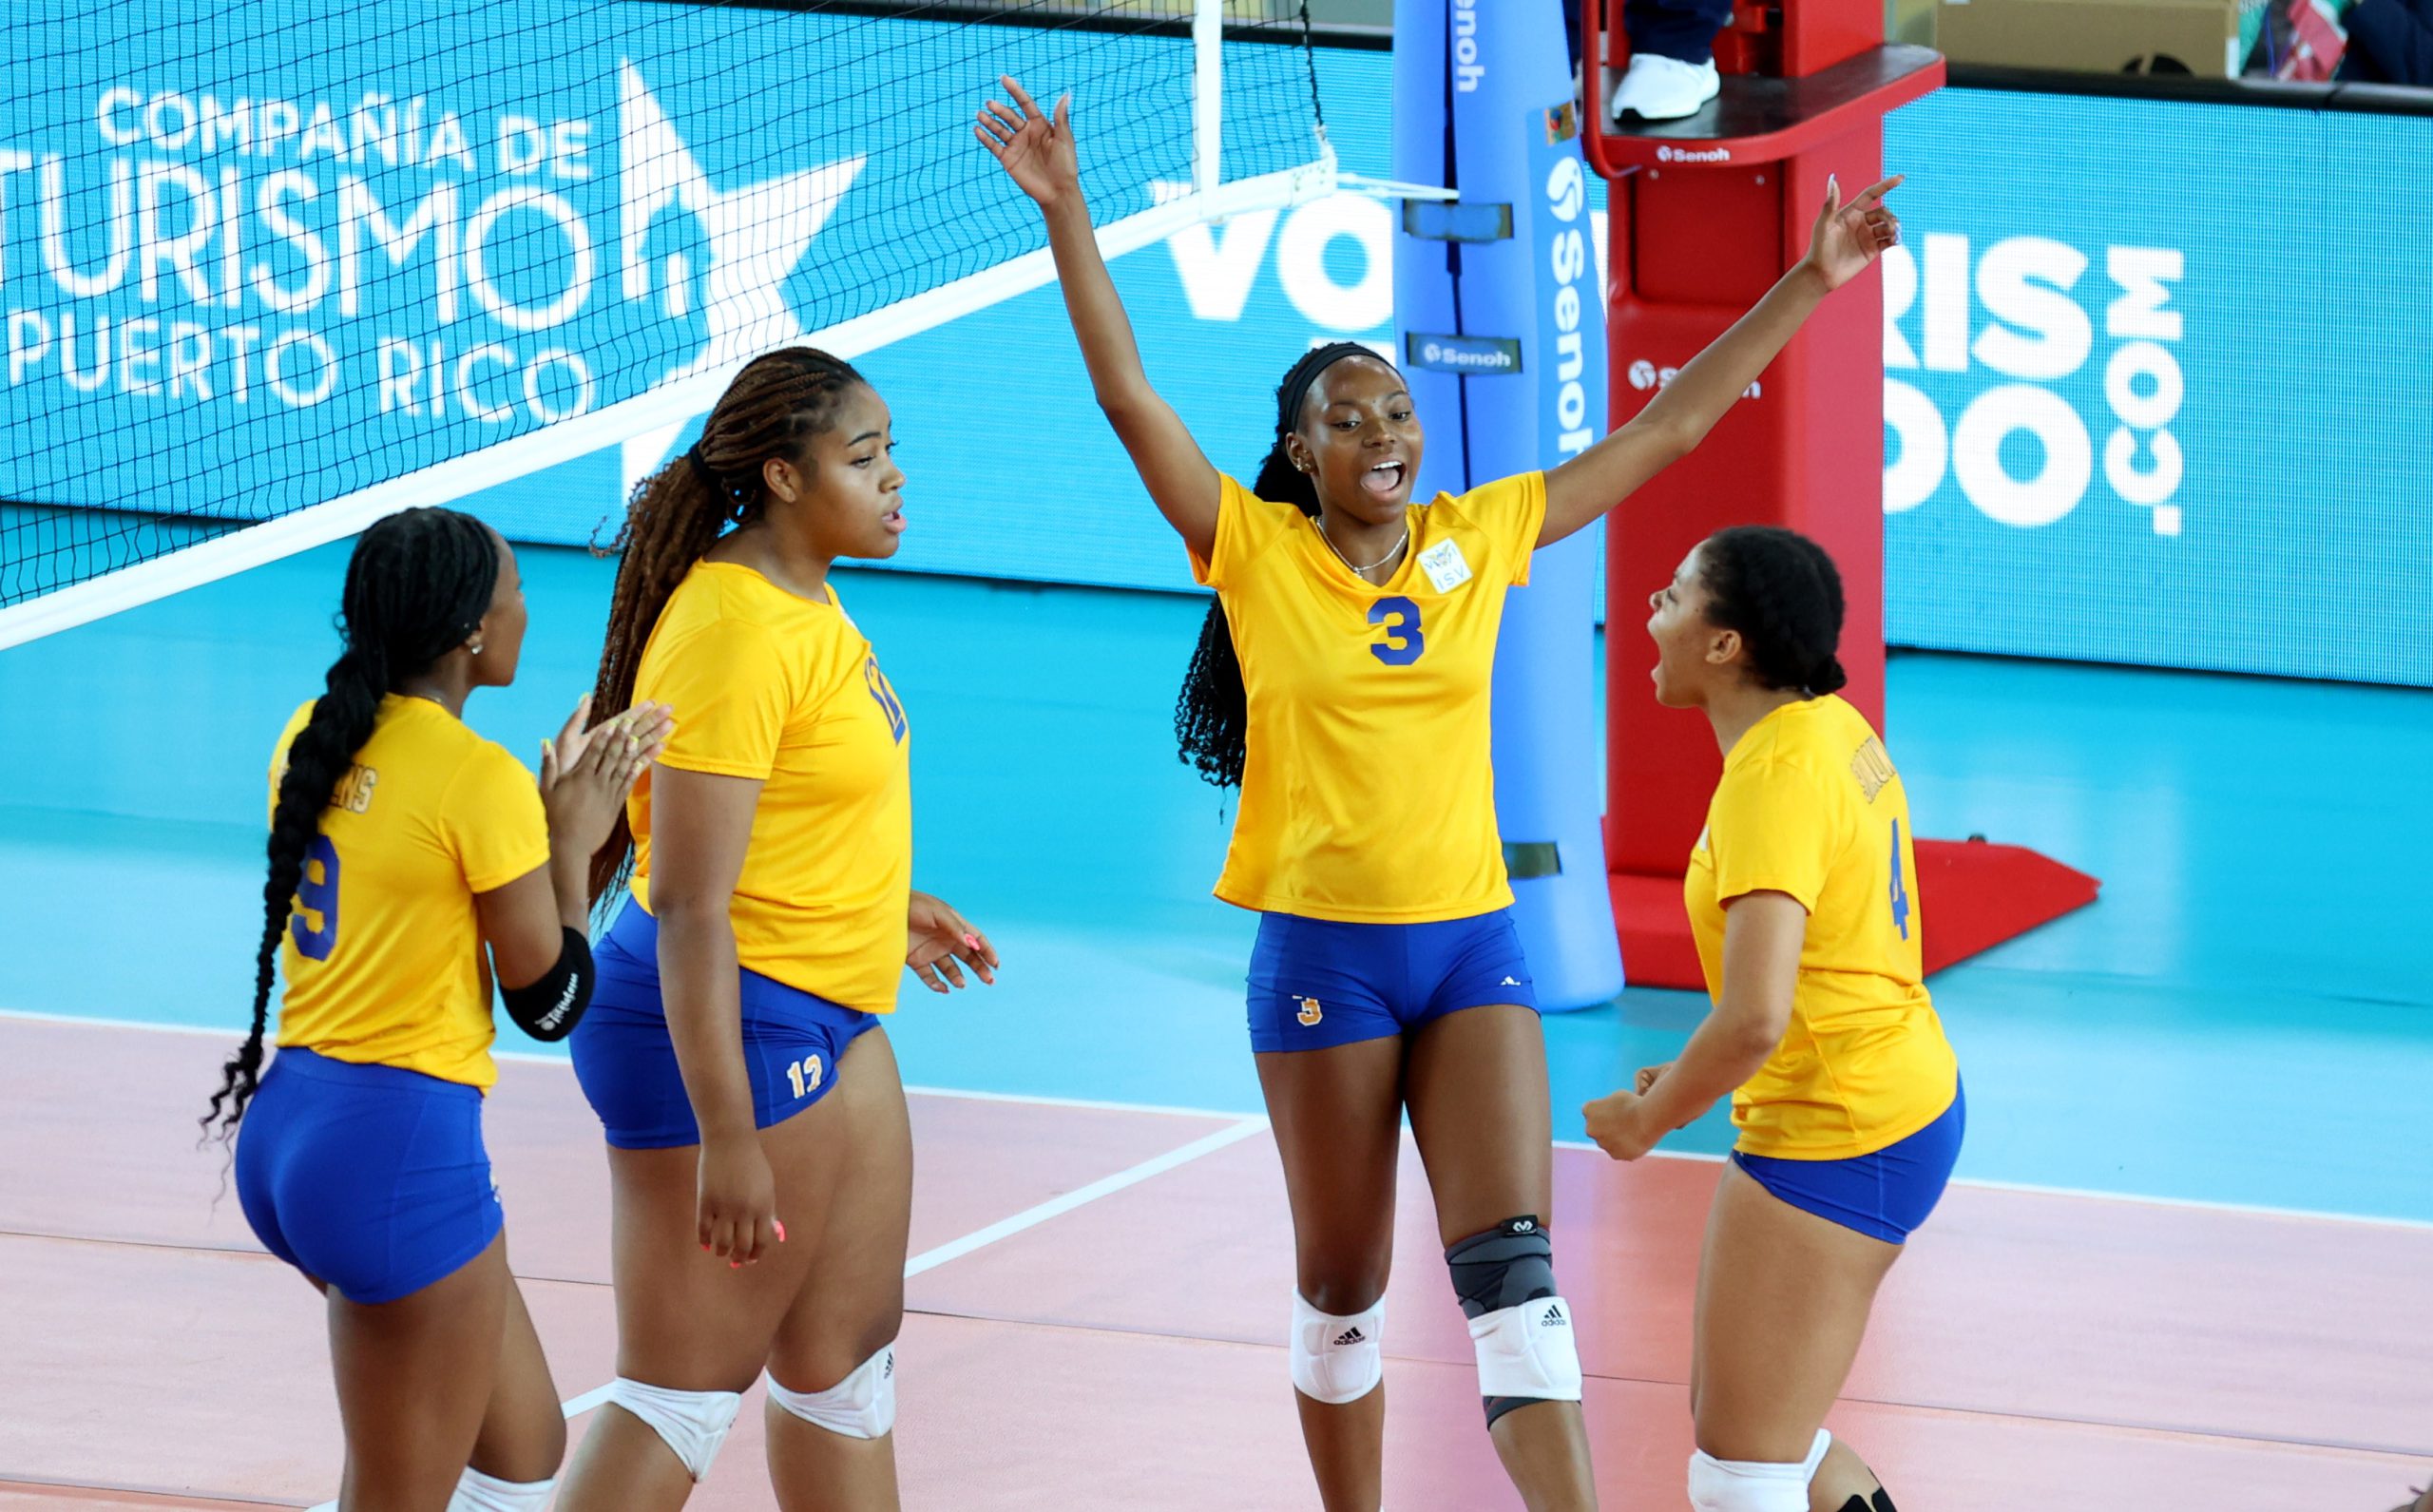 US Virgin Islands finishes seventh place beating Honduras